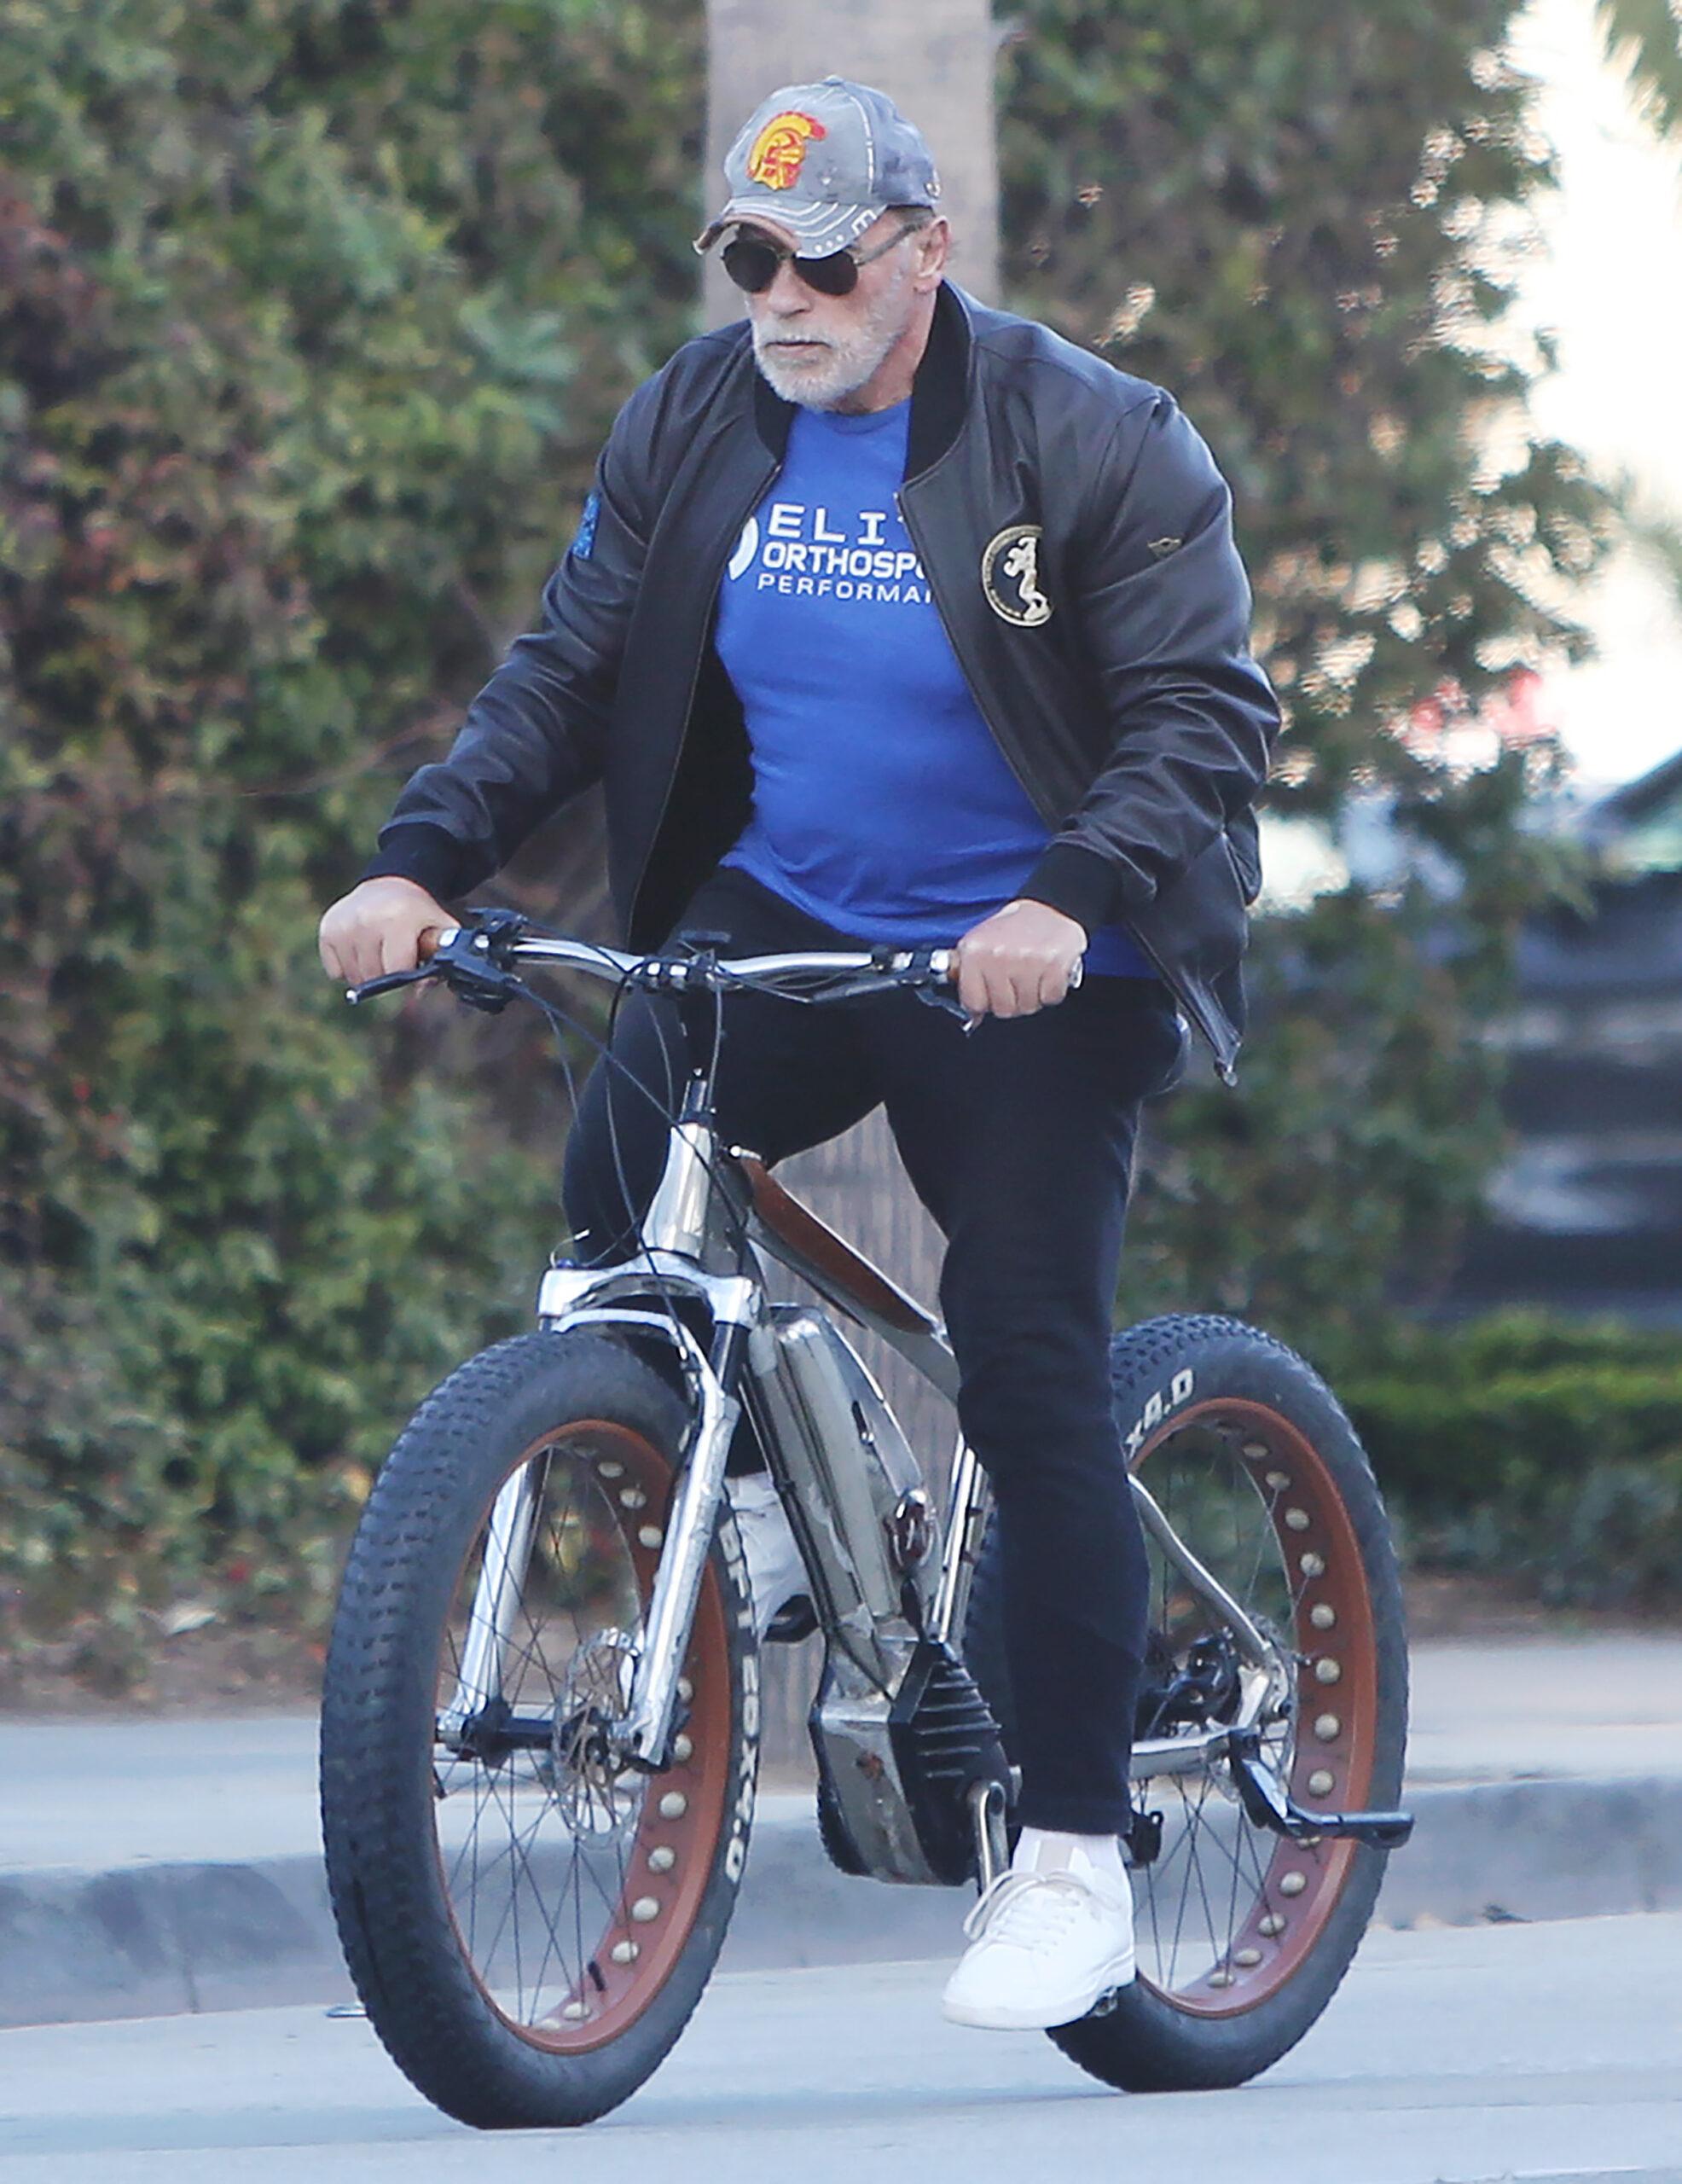 Arnold Schwarzenegger biking with his pals in Santa Monica